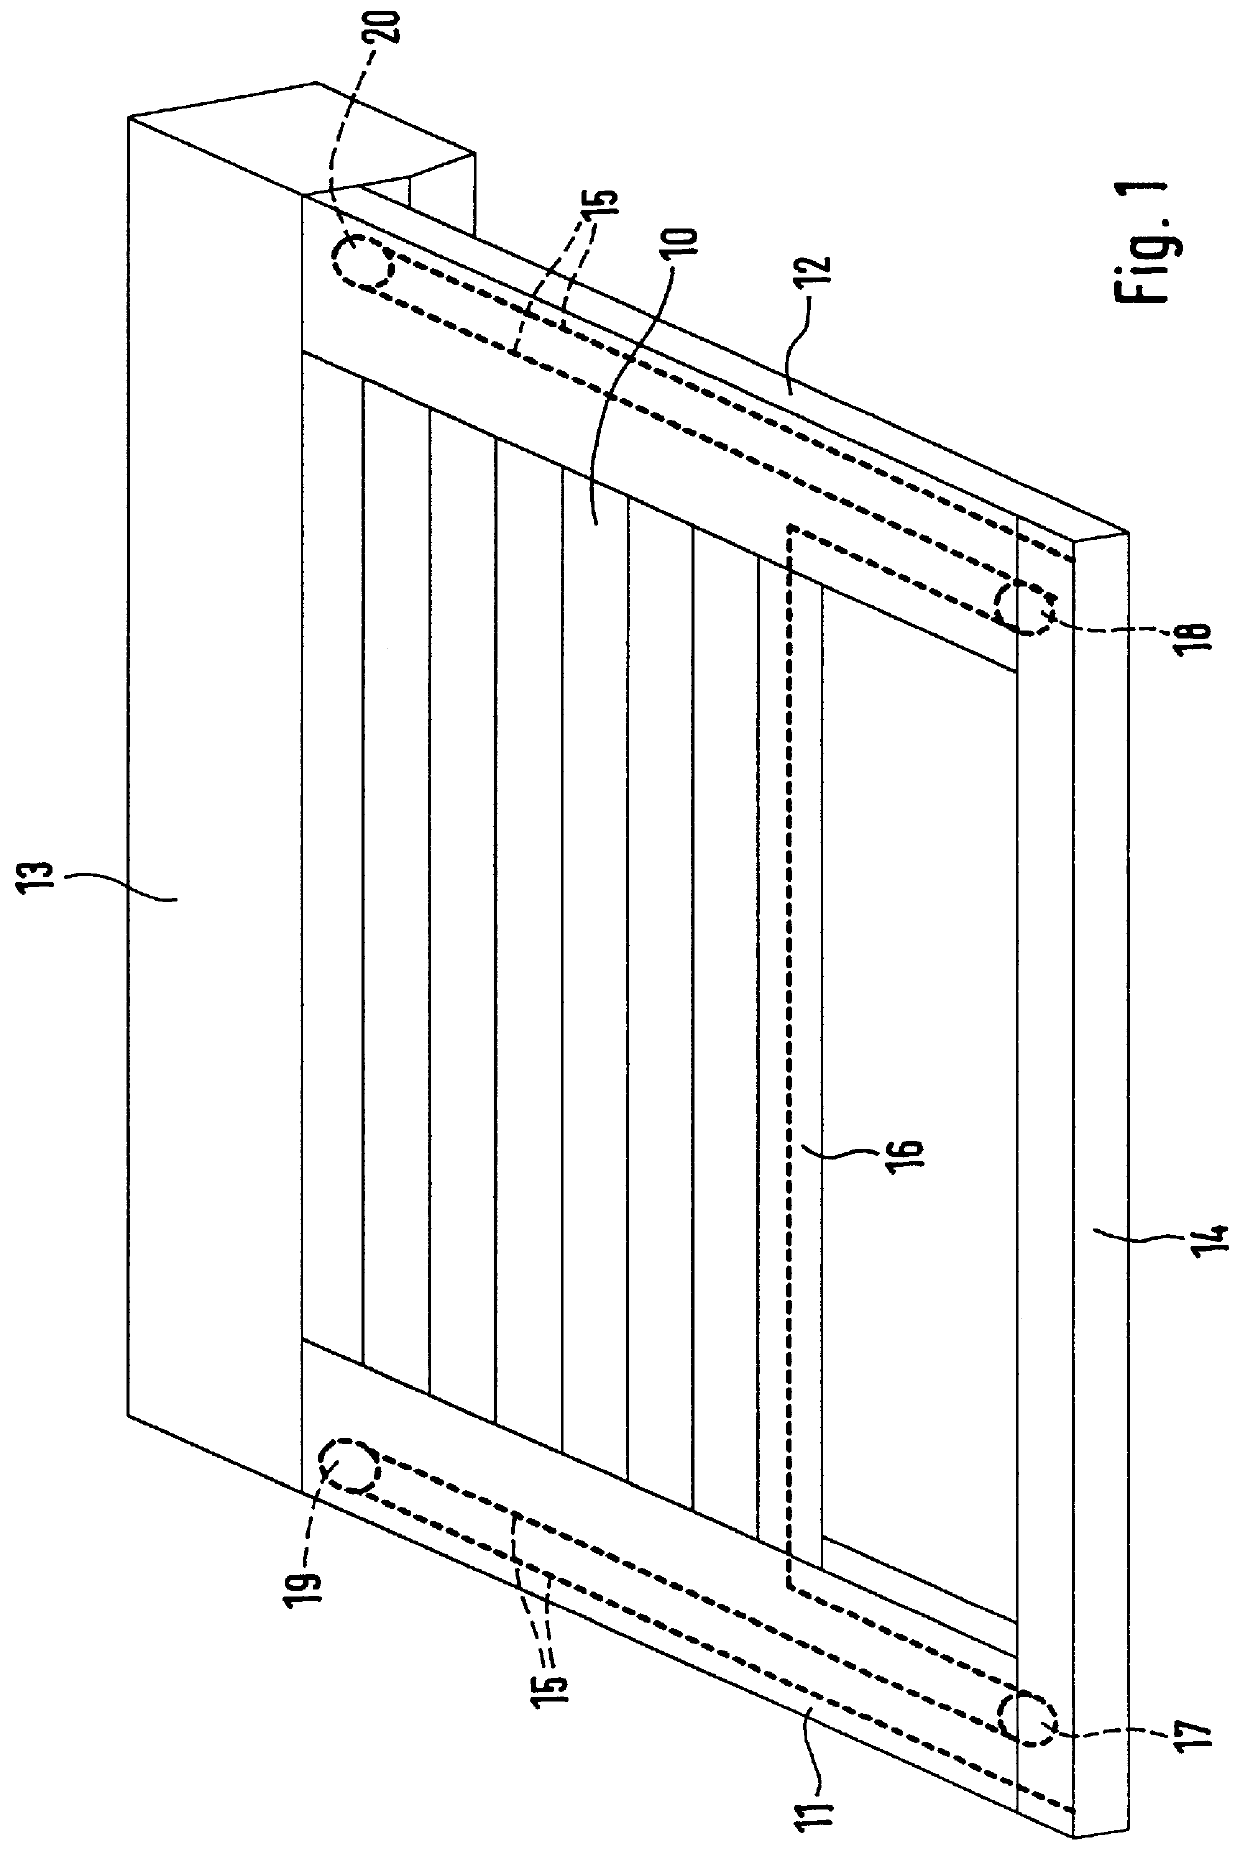 Roller shutter arrangement more particularly for obliquely arranged roller shutter areas